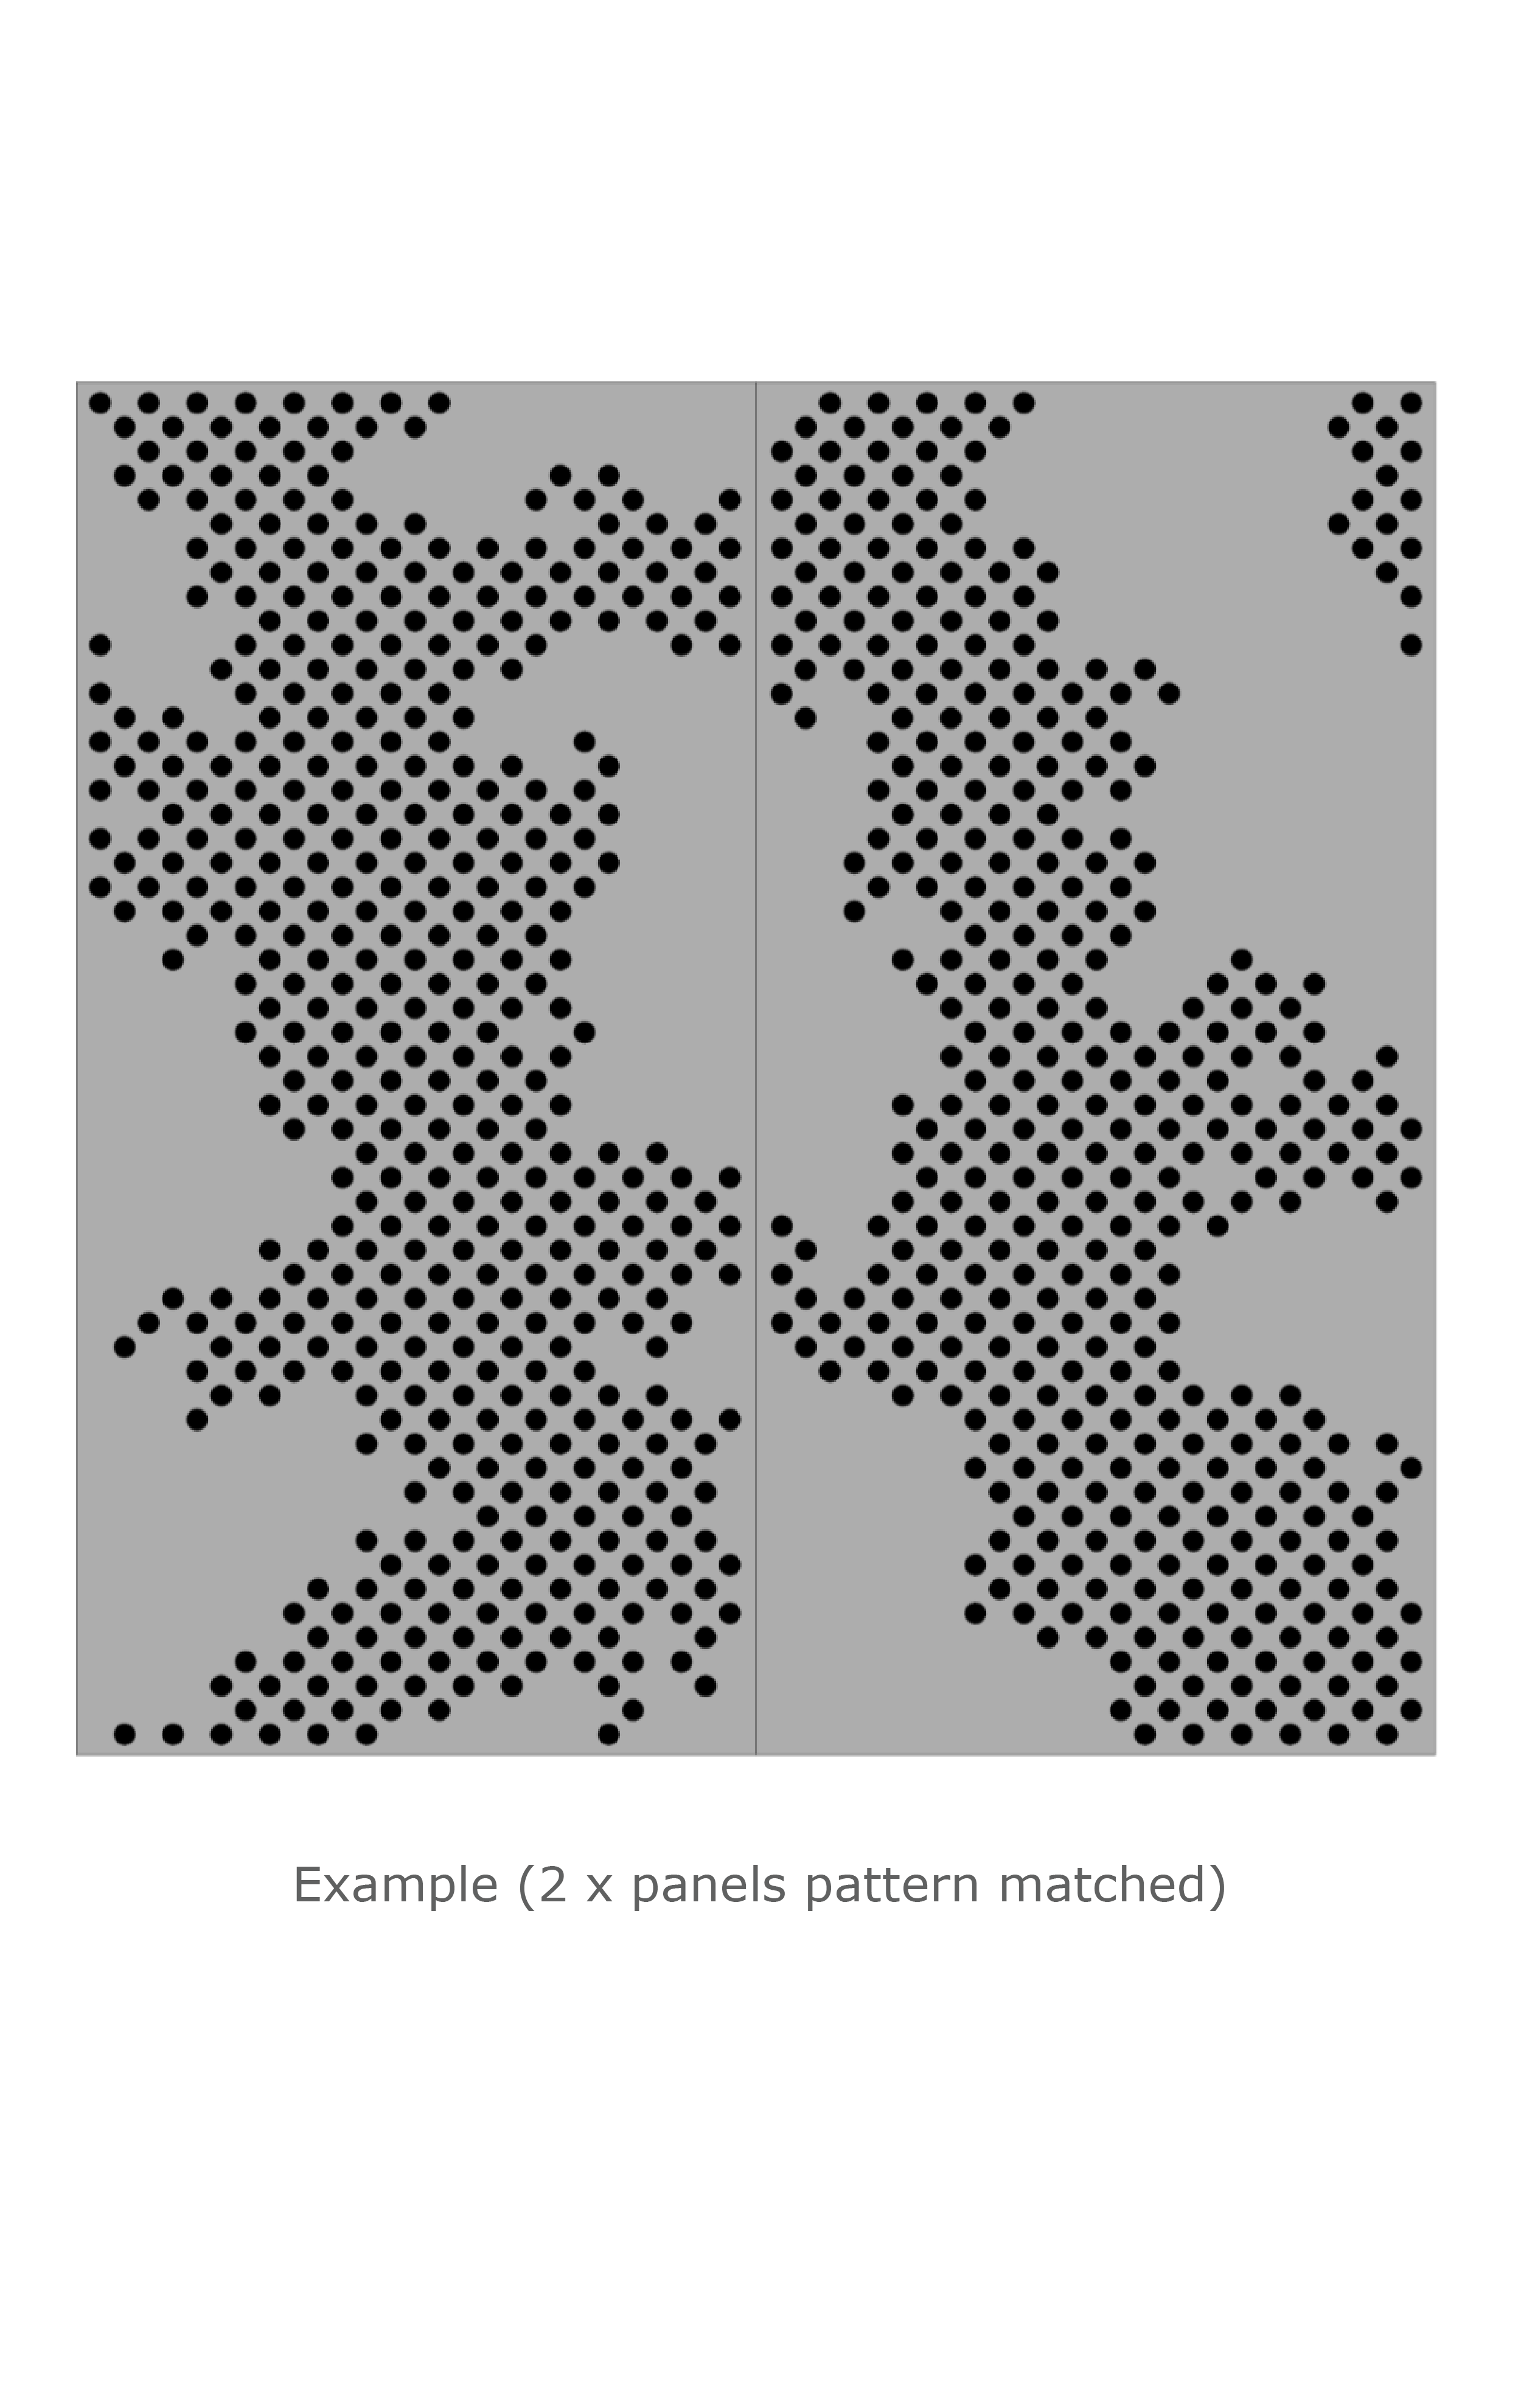 Bespoke Perforated Sheets - Round Holes Pattern Matching